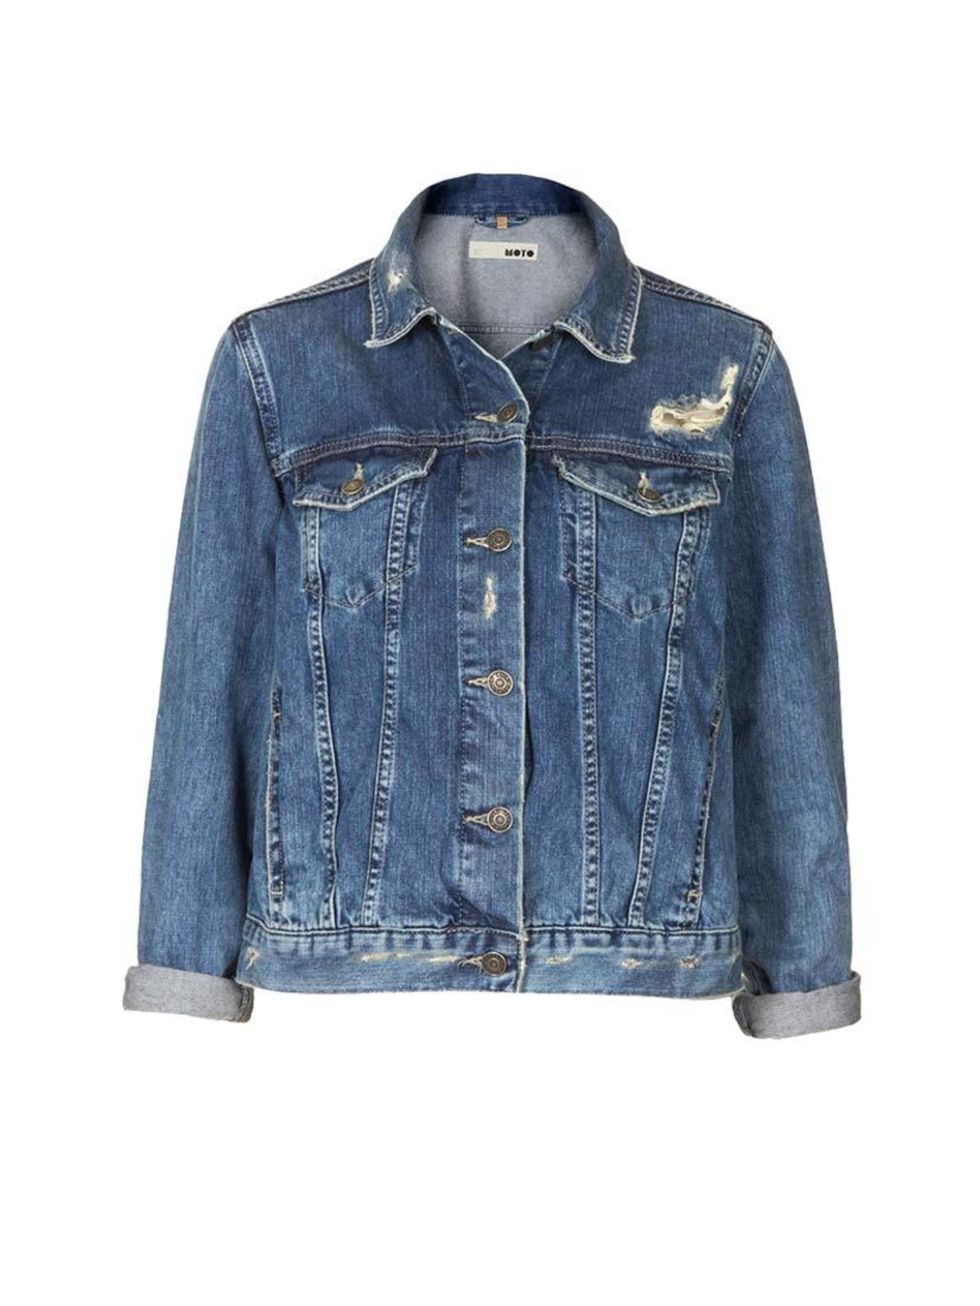 <p><strong>The Jacket</strong></p><p>MOTO denim jacket, £45, at <a href="http://www.topshop.com/en/tsuk/product/clothing-427/denim-897/moto-vintage-wash-denim-jacket-2721278?bi=1&amp;ps=200">Topshop</a></p>